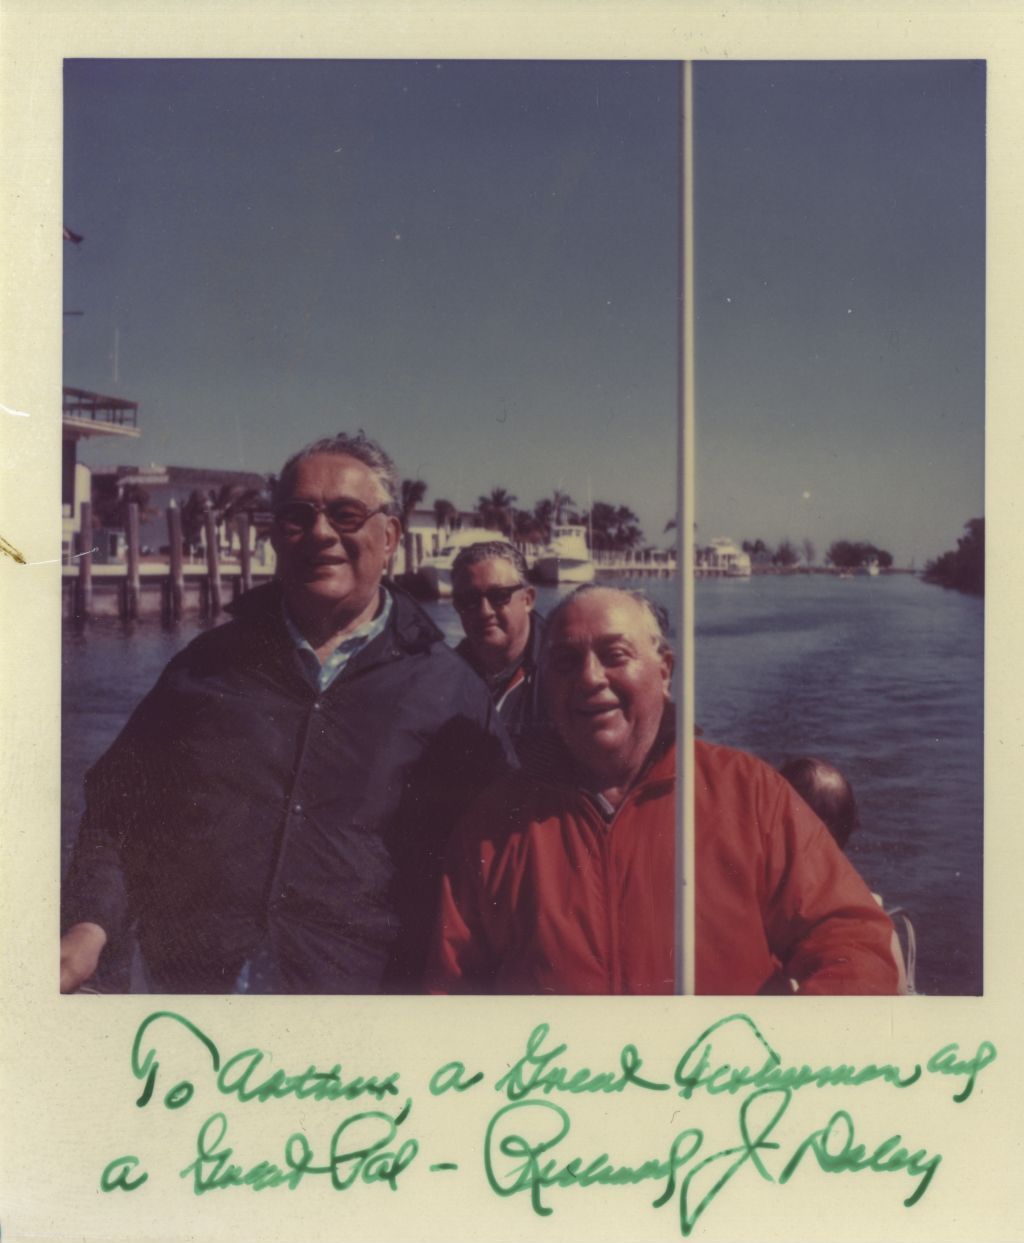 Miniature of Richard J. Daley with Arthur Wirtz on a fishing trip